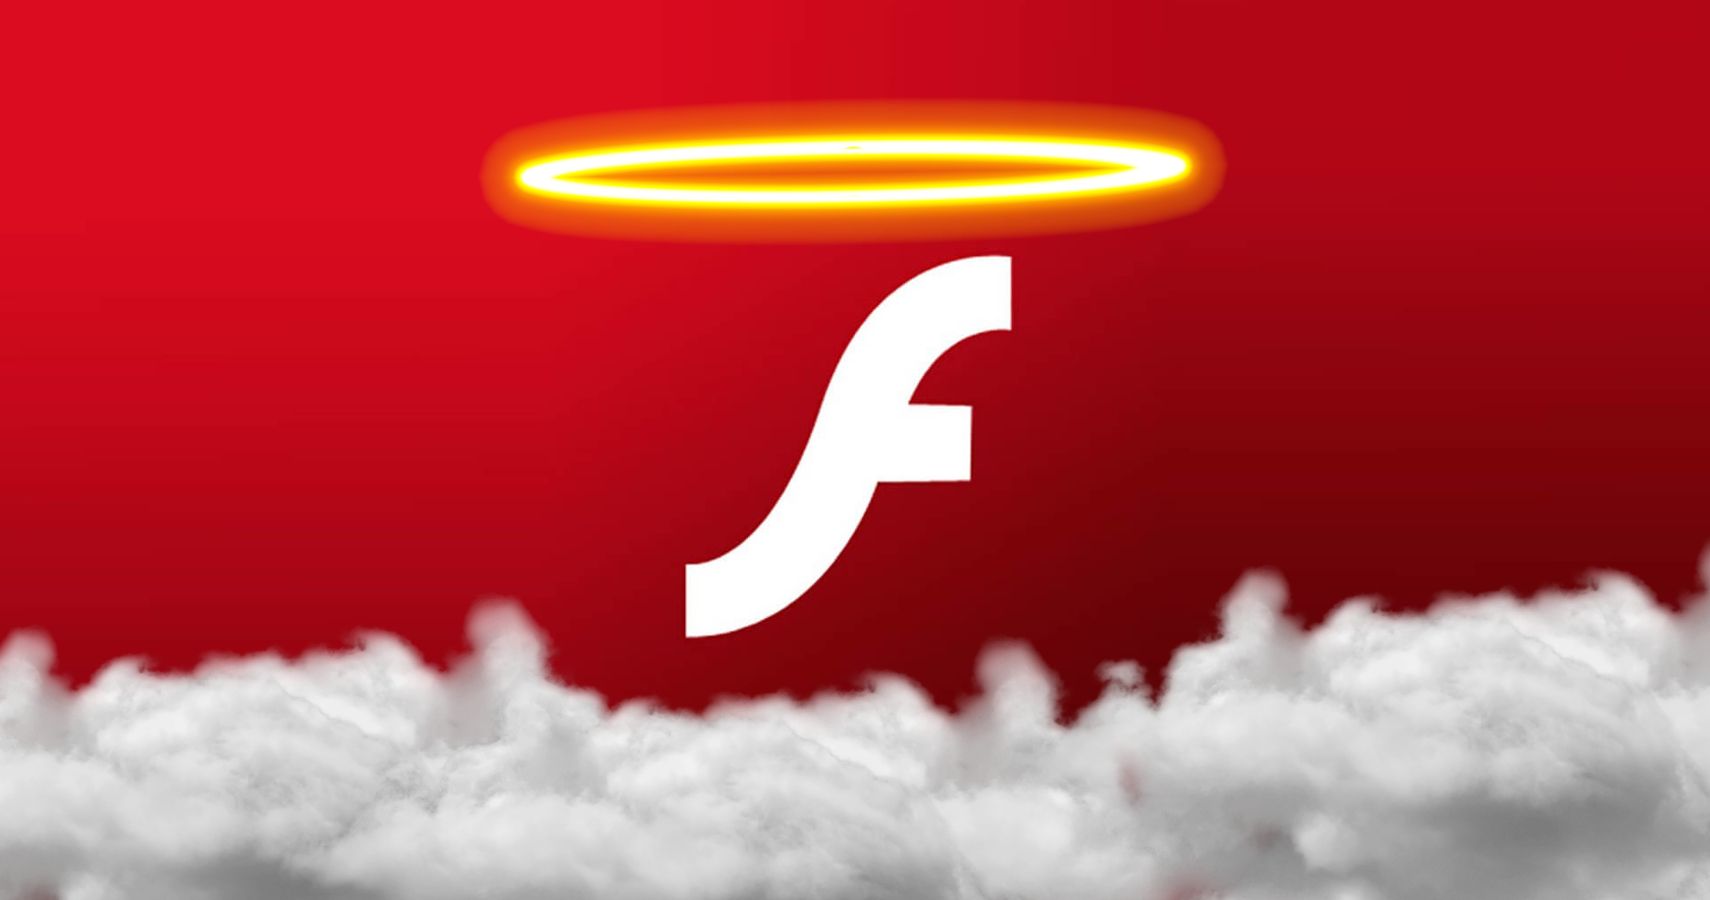 2020 finally killed Adobe Flash Player